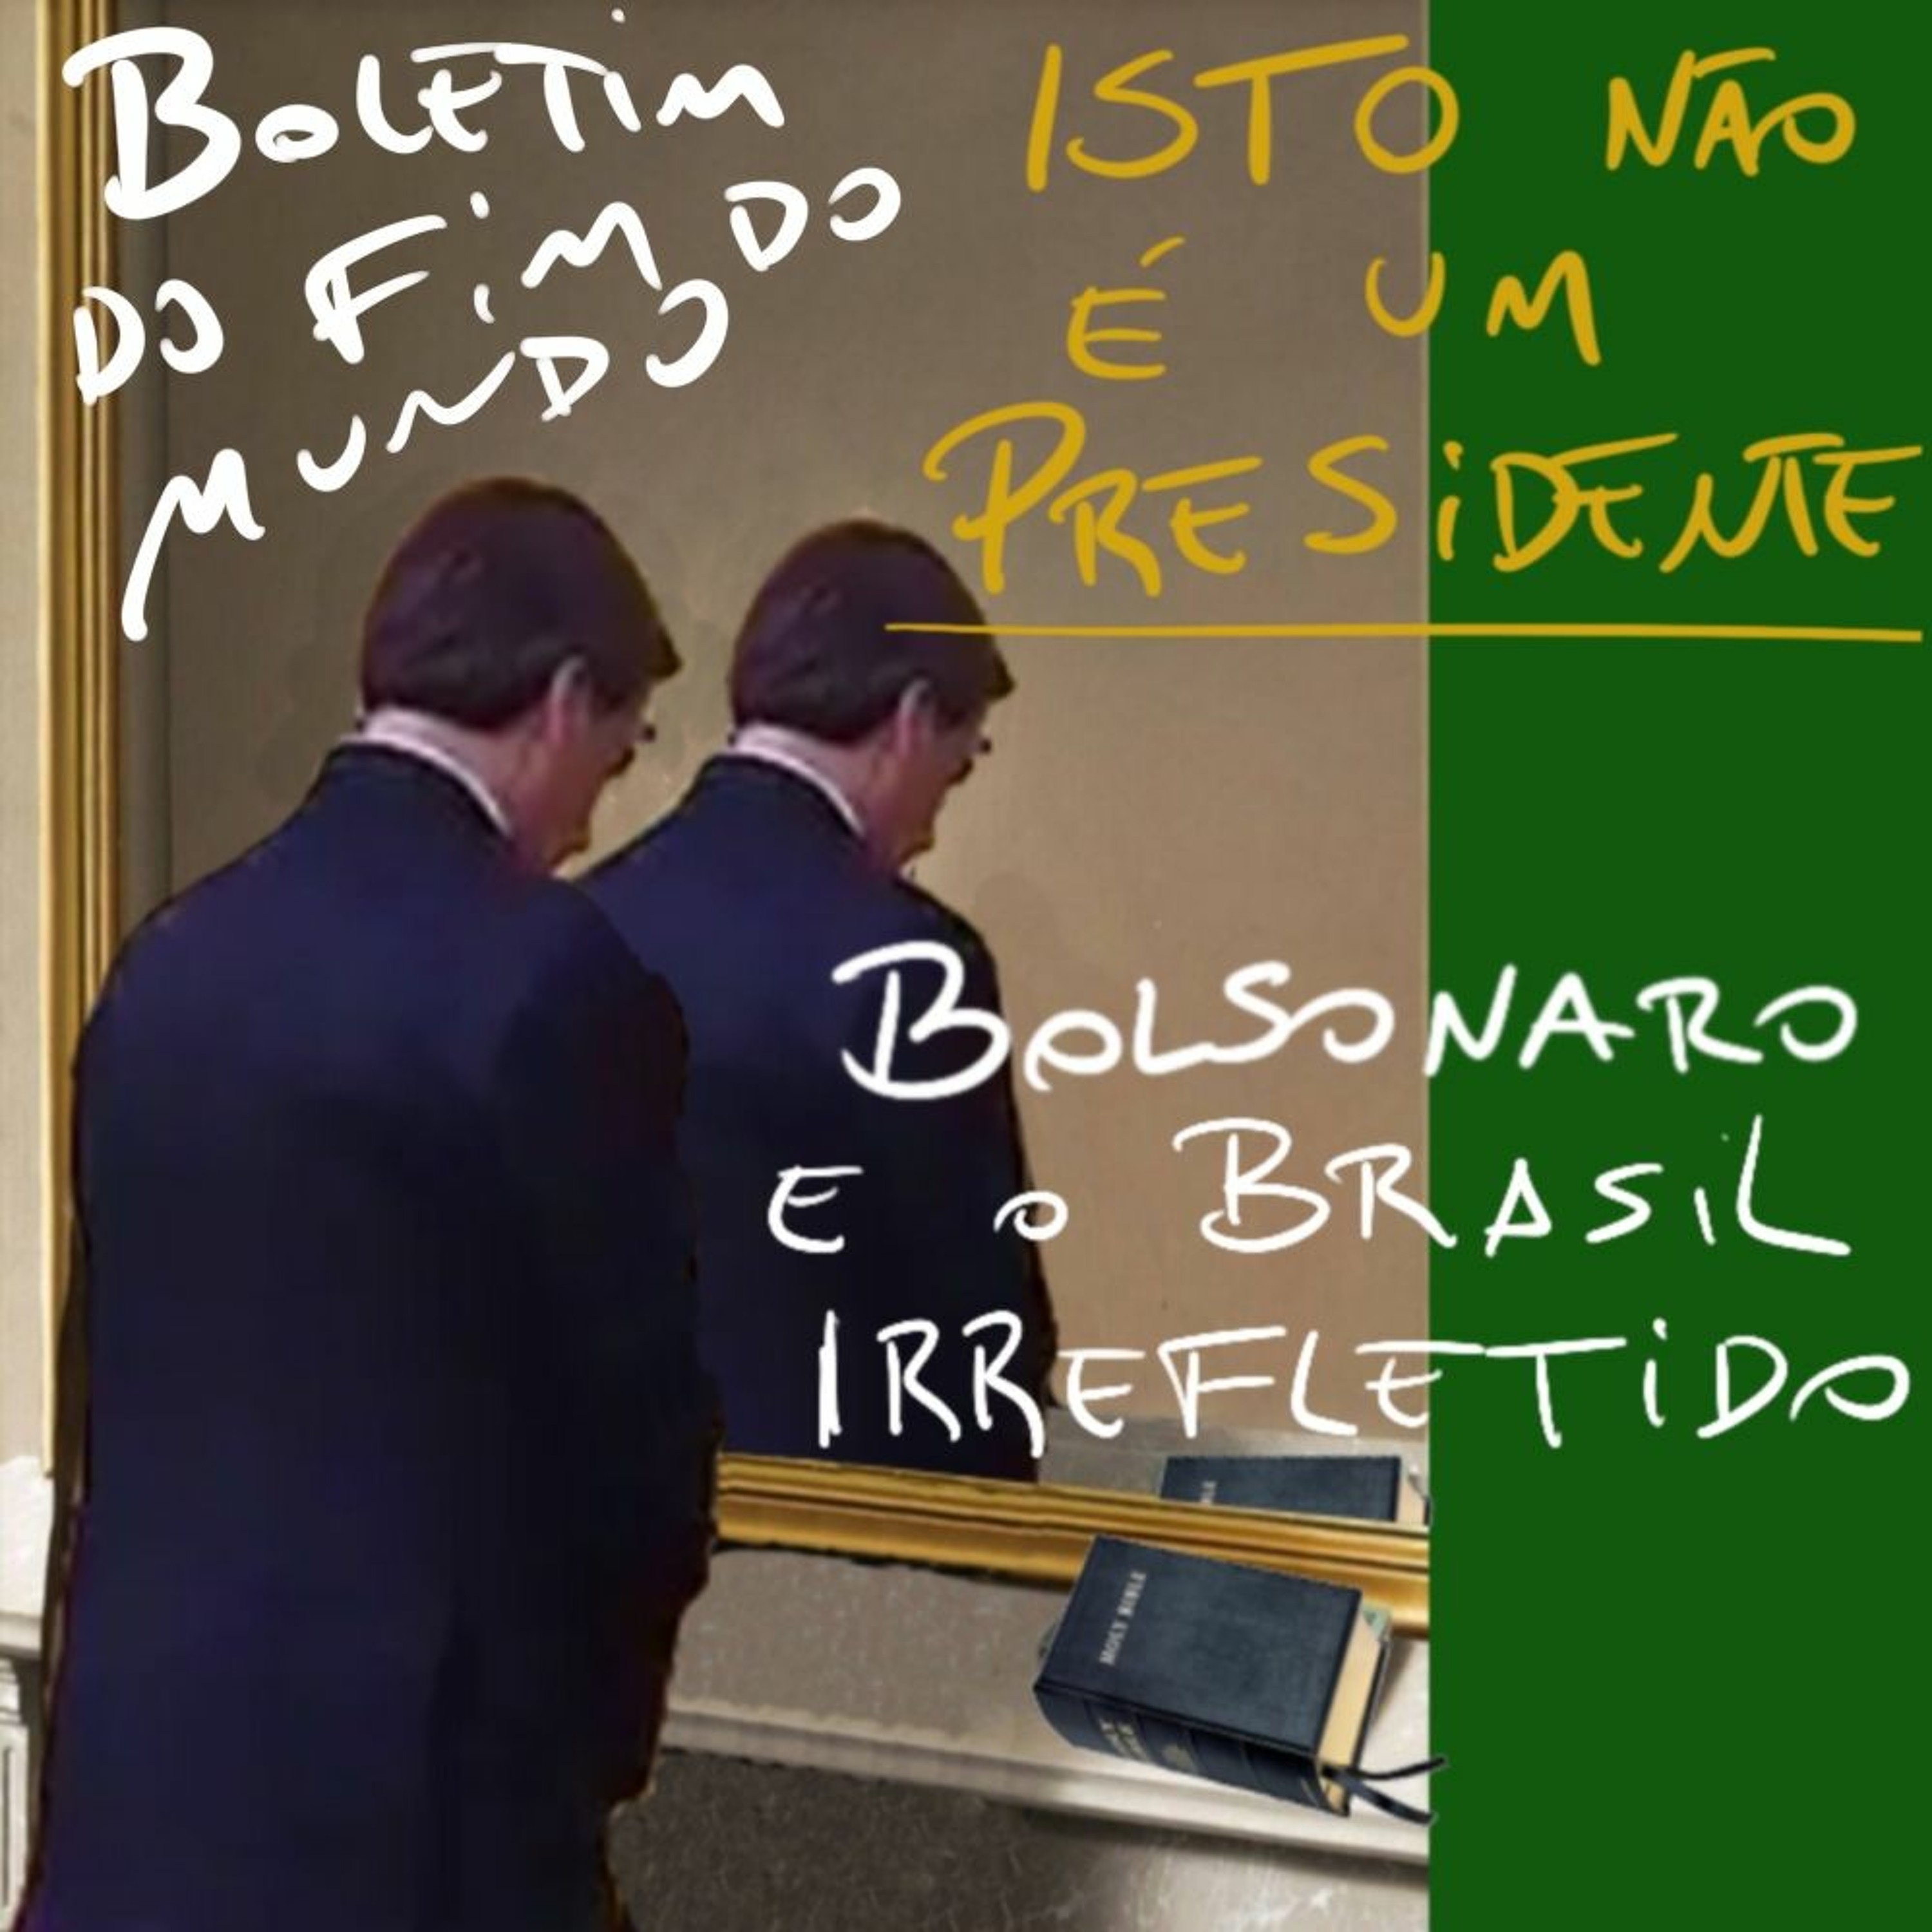 BFM - 17/3 - Isto não é um Presidente. Bolsonaro e o Brasil Irrefletido